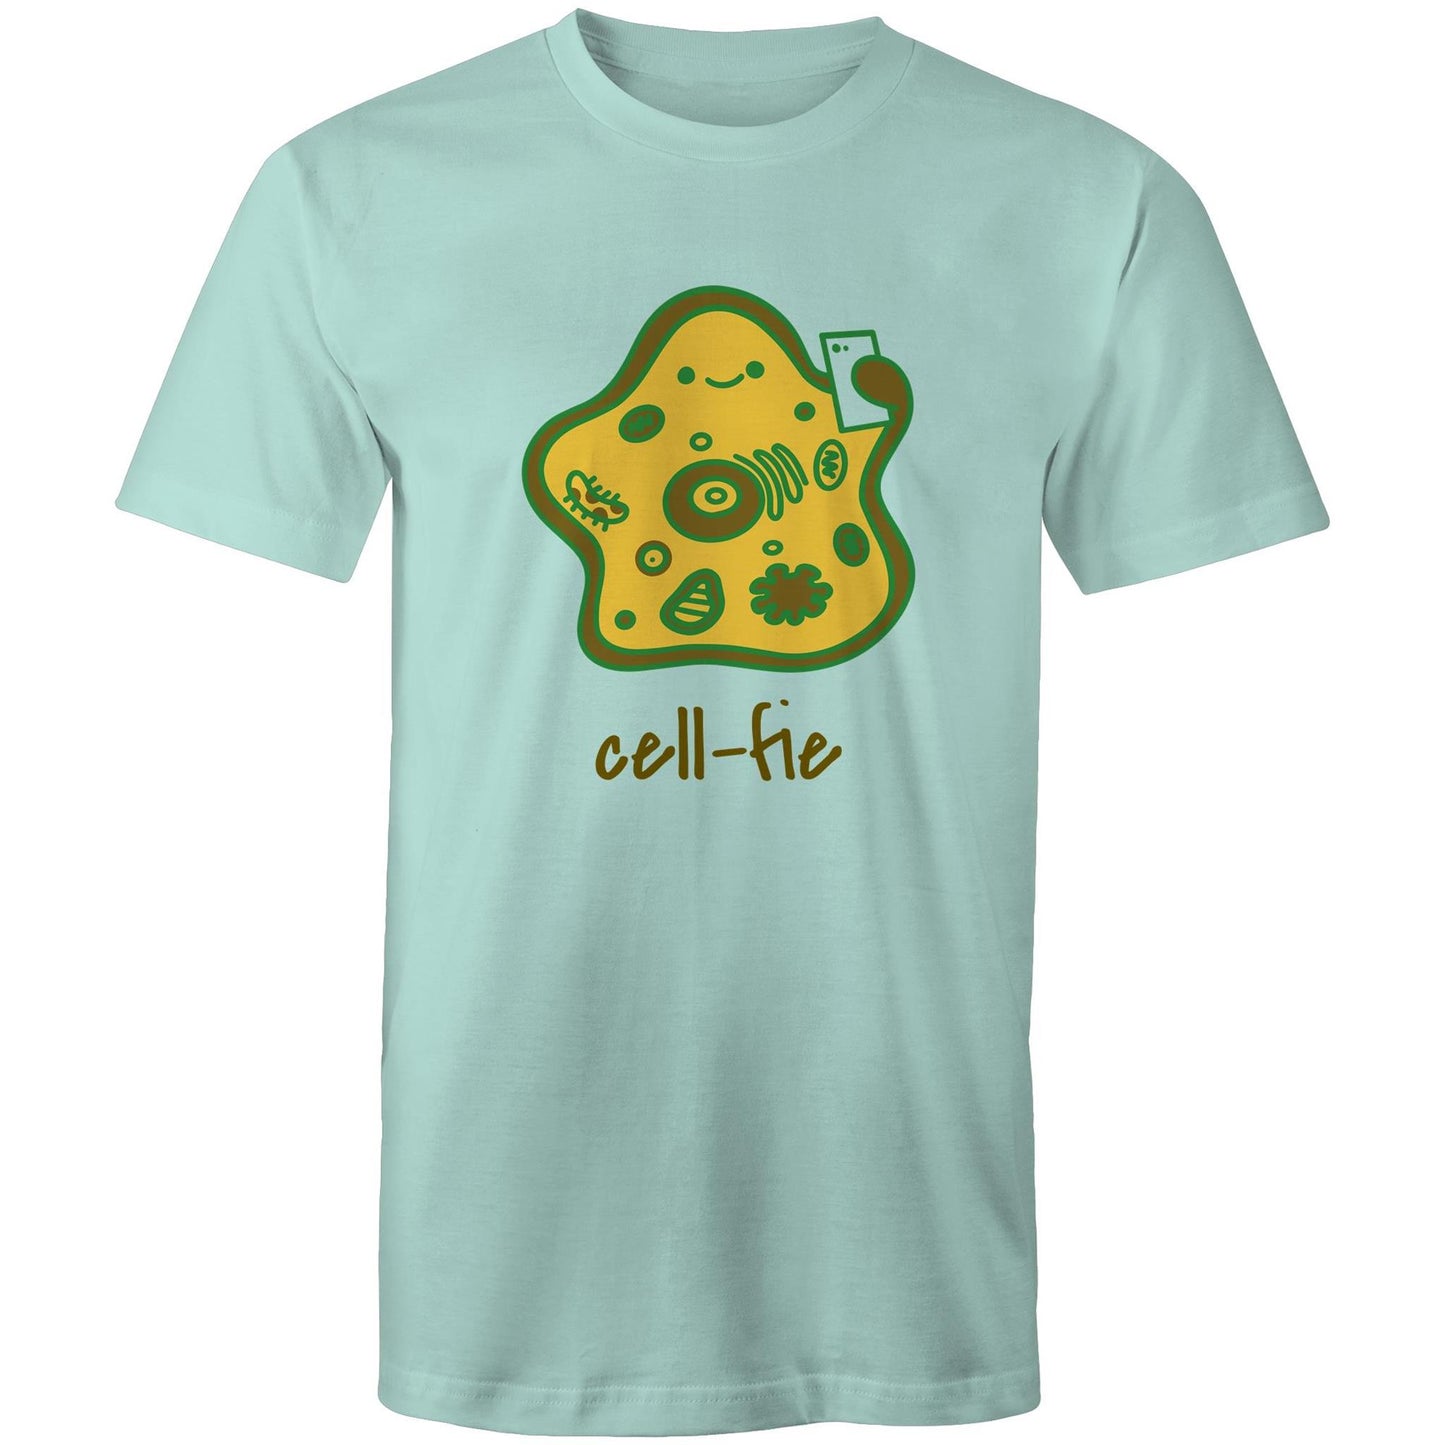 Cell-fie - Mens T-Shirt Aqua Mens T-shirt Science